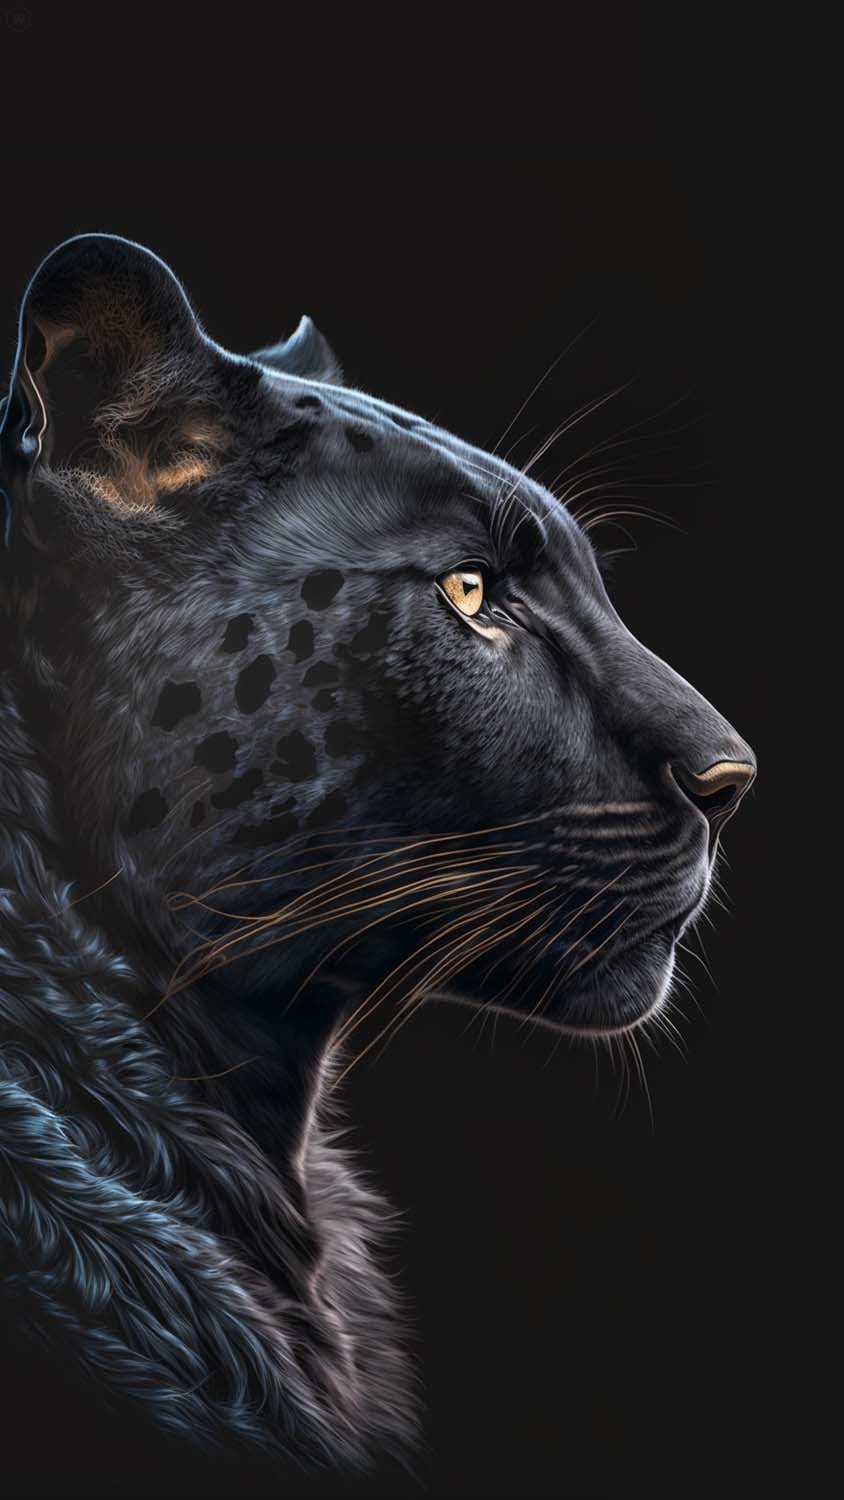 Black panther wallpaper  Black jaguar animal Panther pictures Black  panther cat